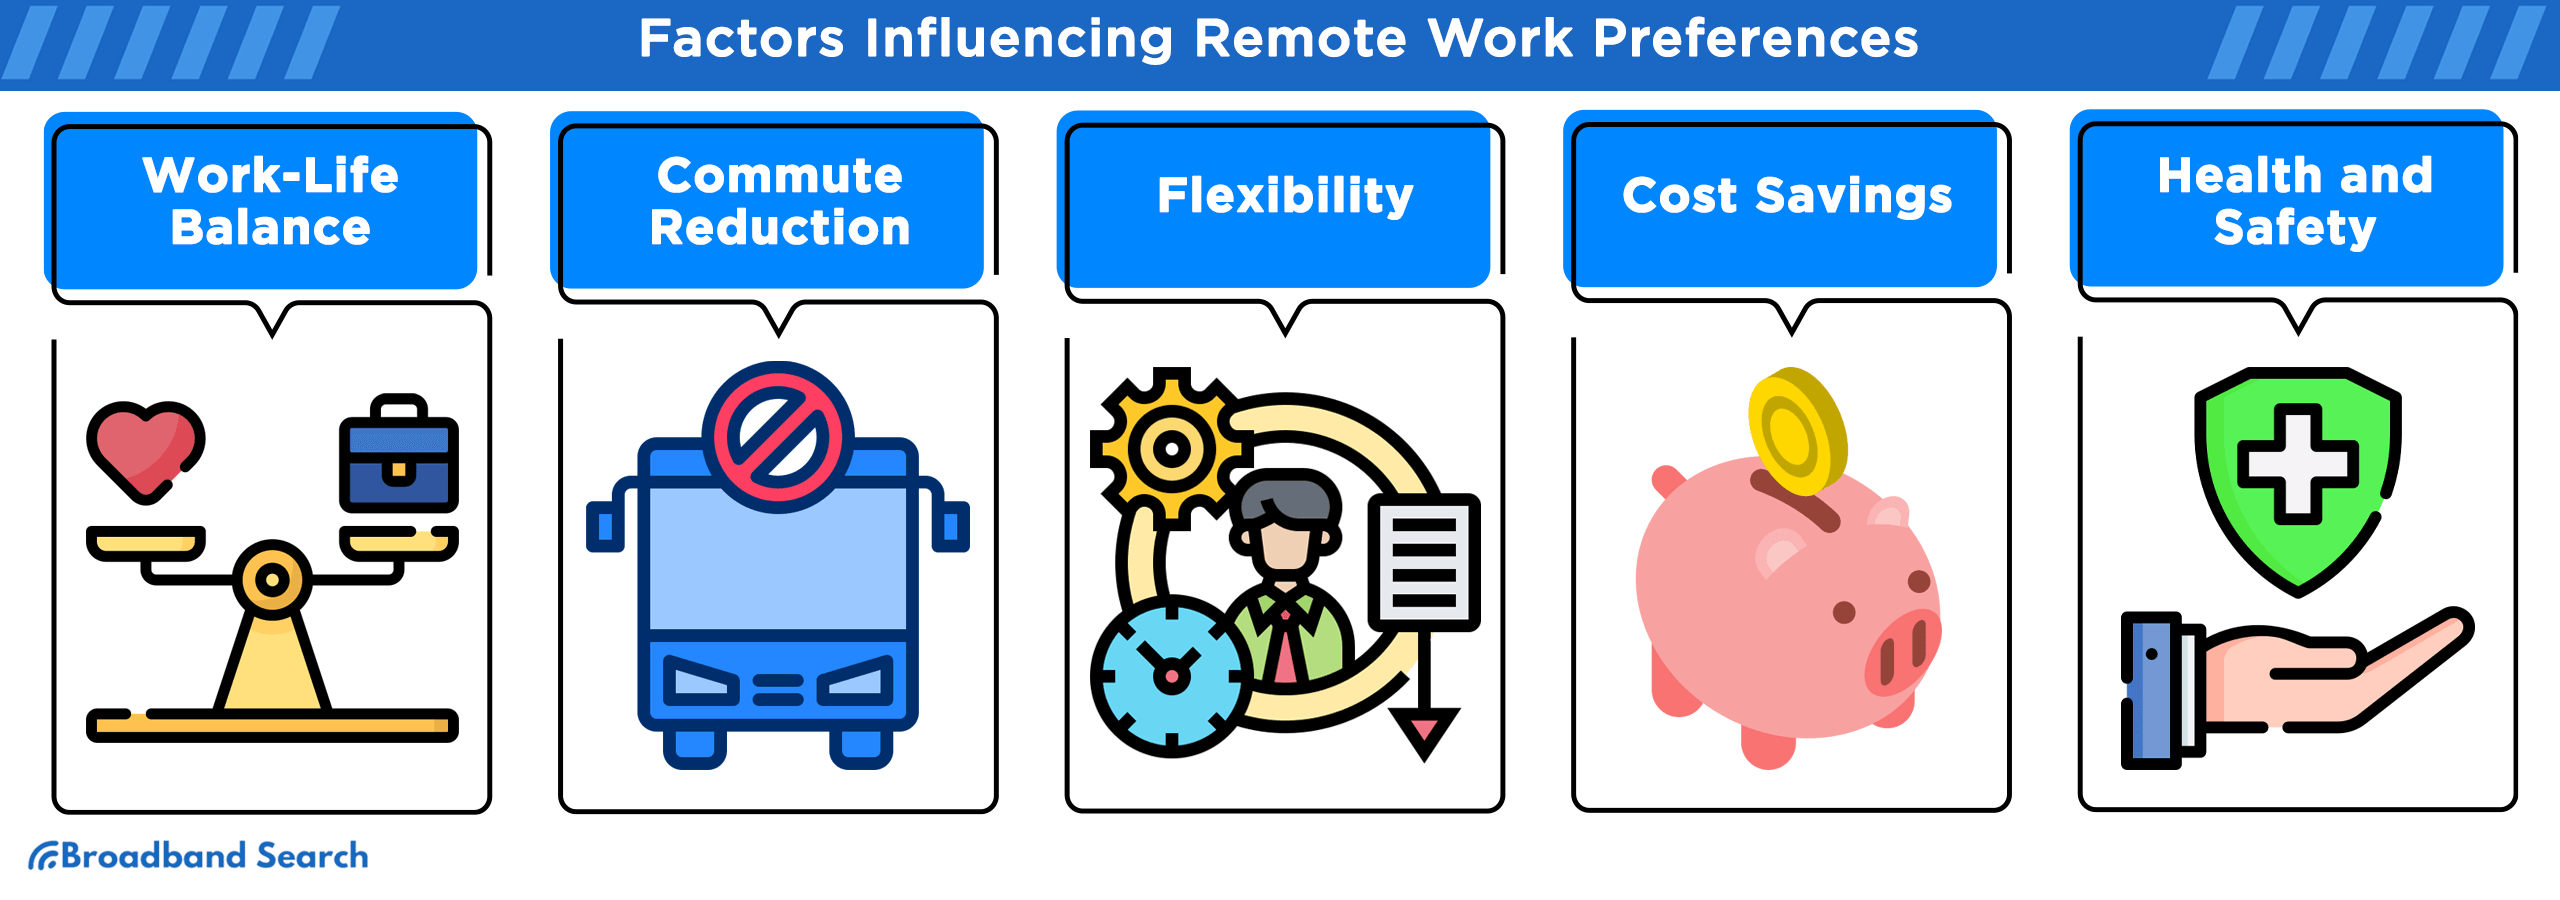 five factors influencing remote work preferences